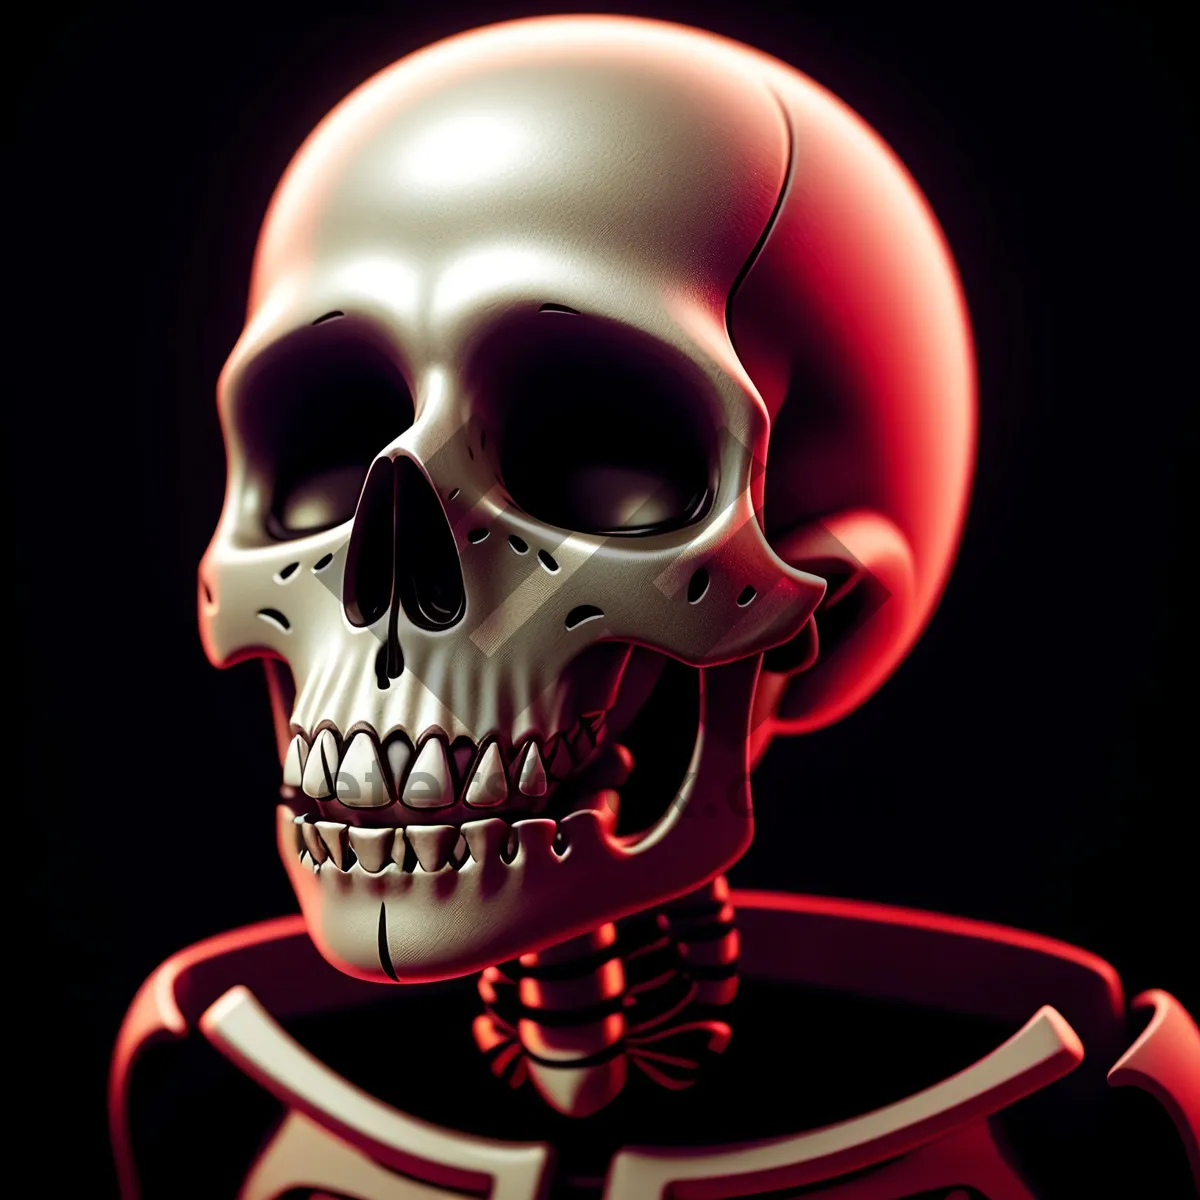 Picture of Spooky Pirate Skull on Dead Man's Bones